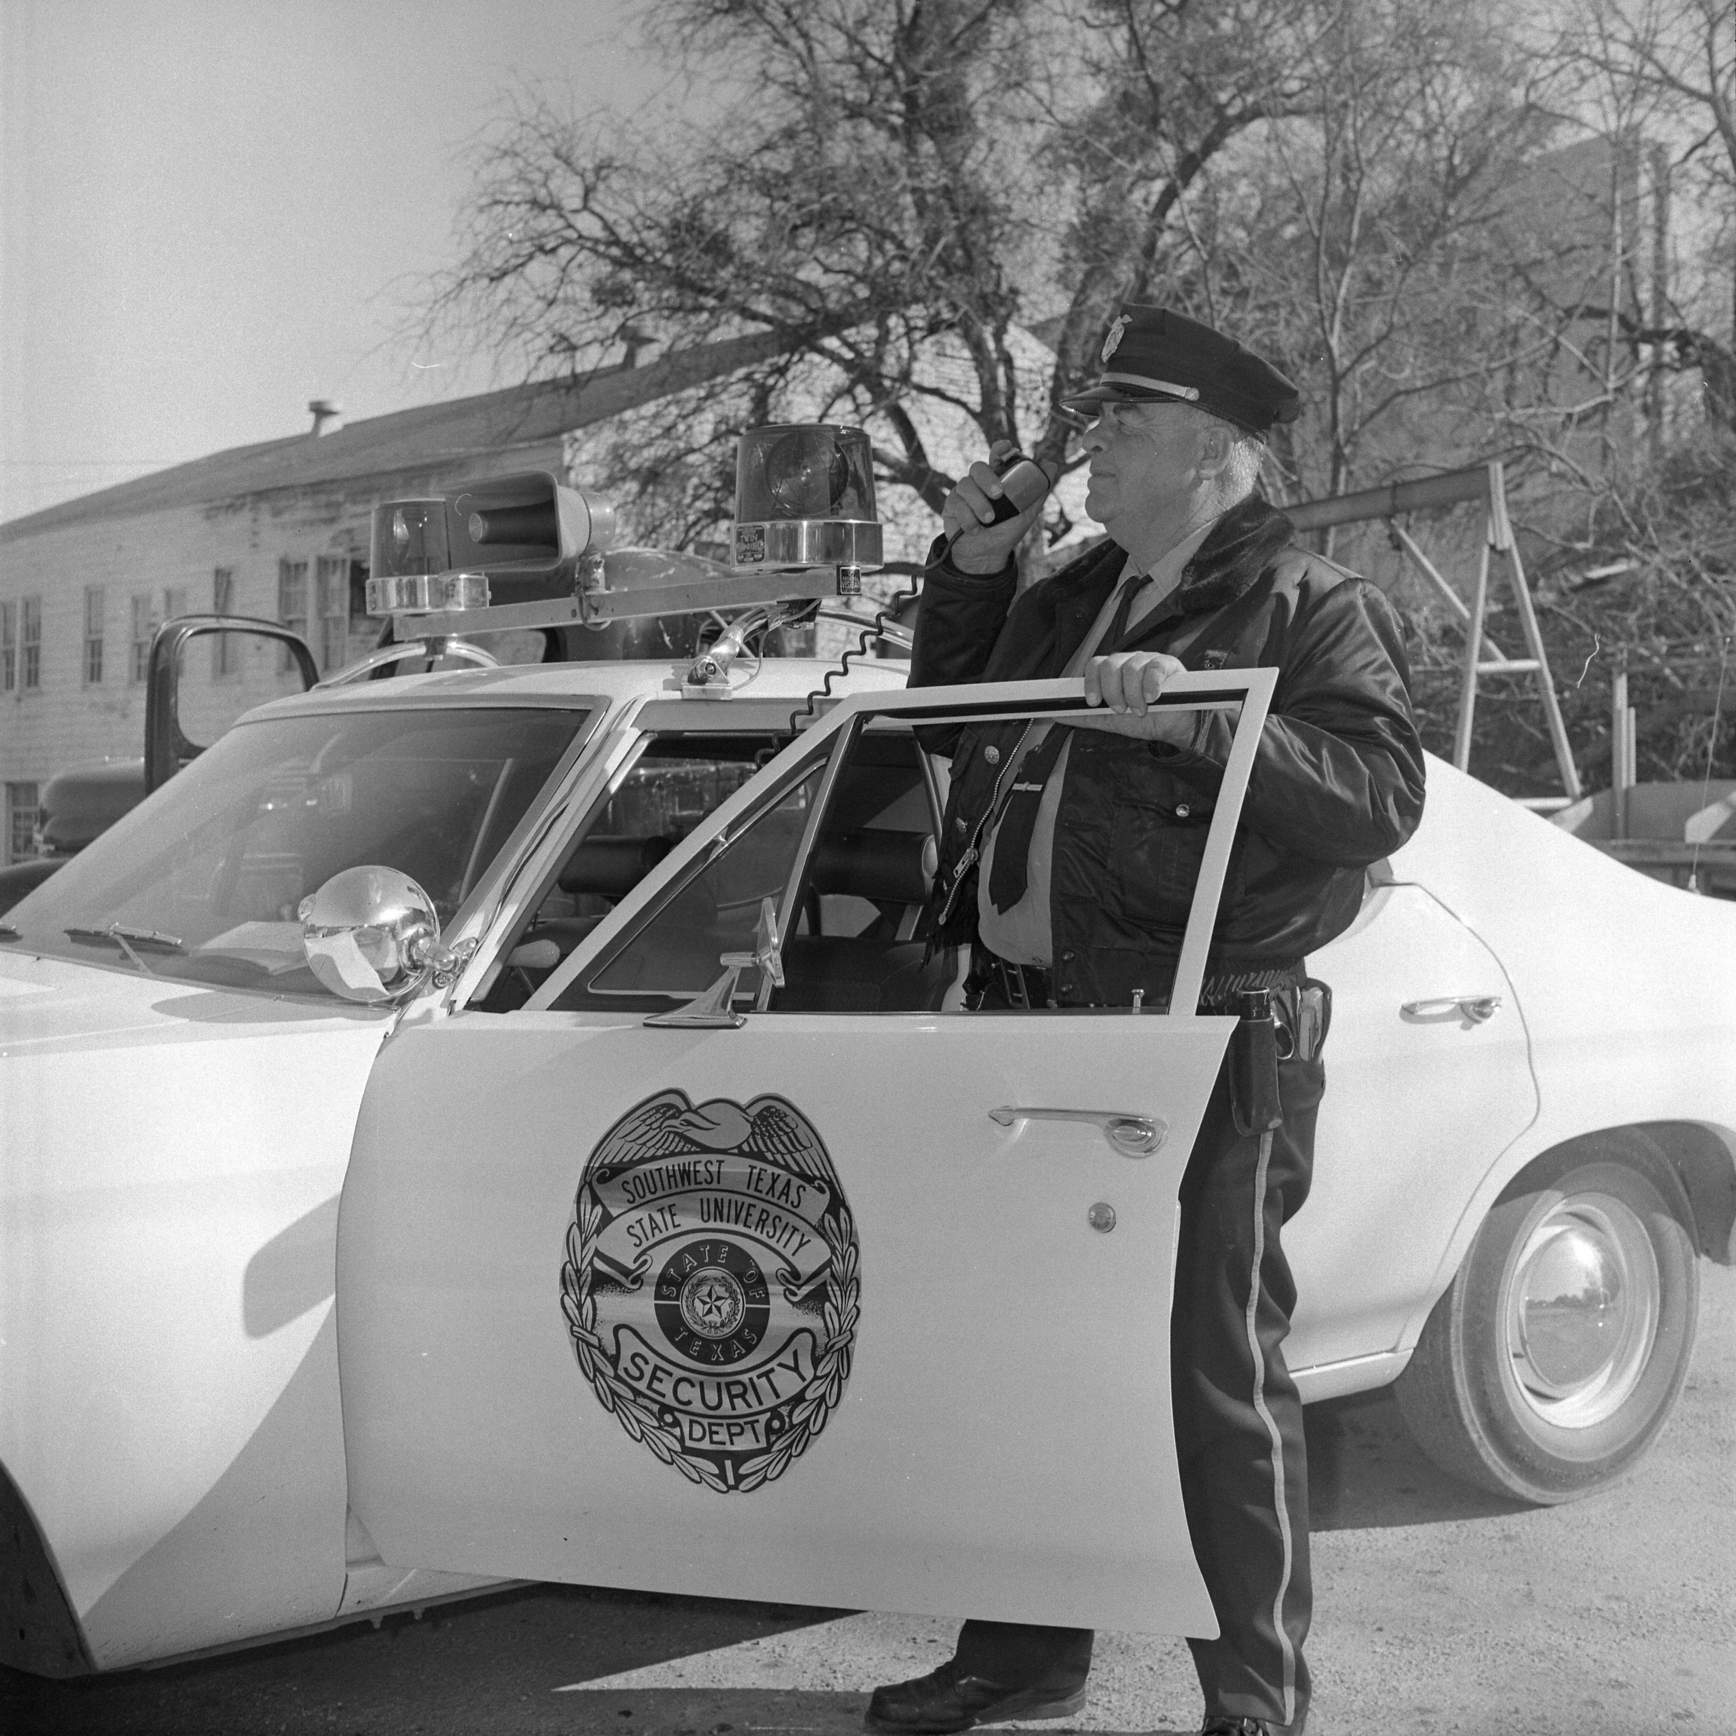 patrol officer Martin Randow poses with a new 1971 patrol car